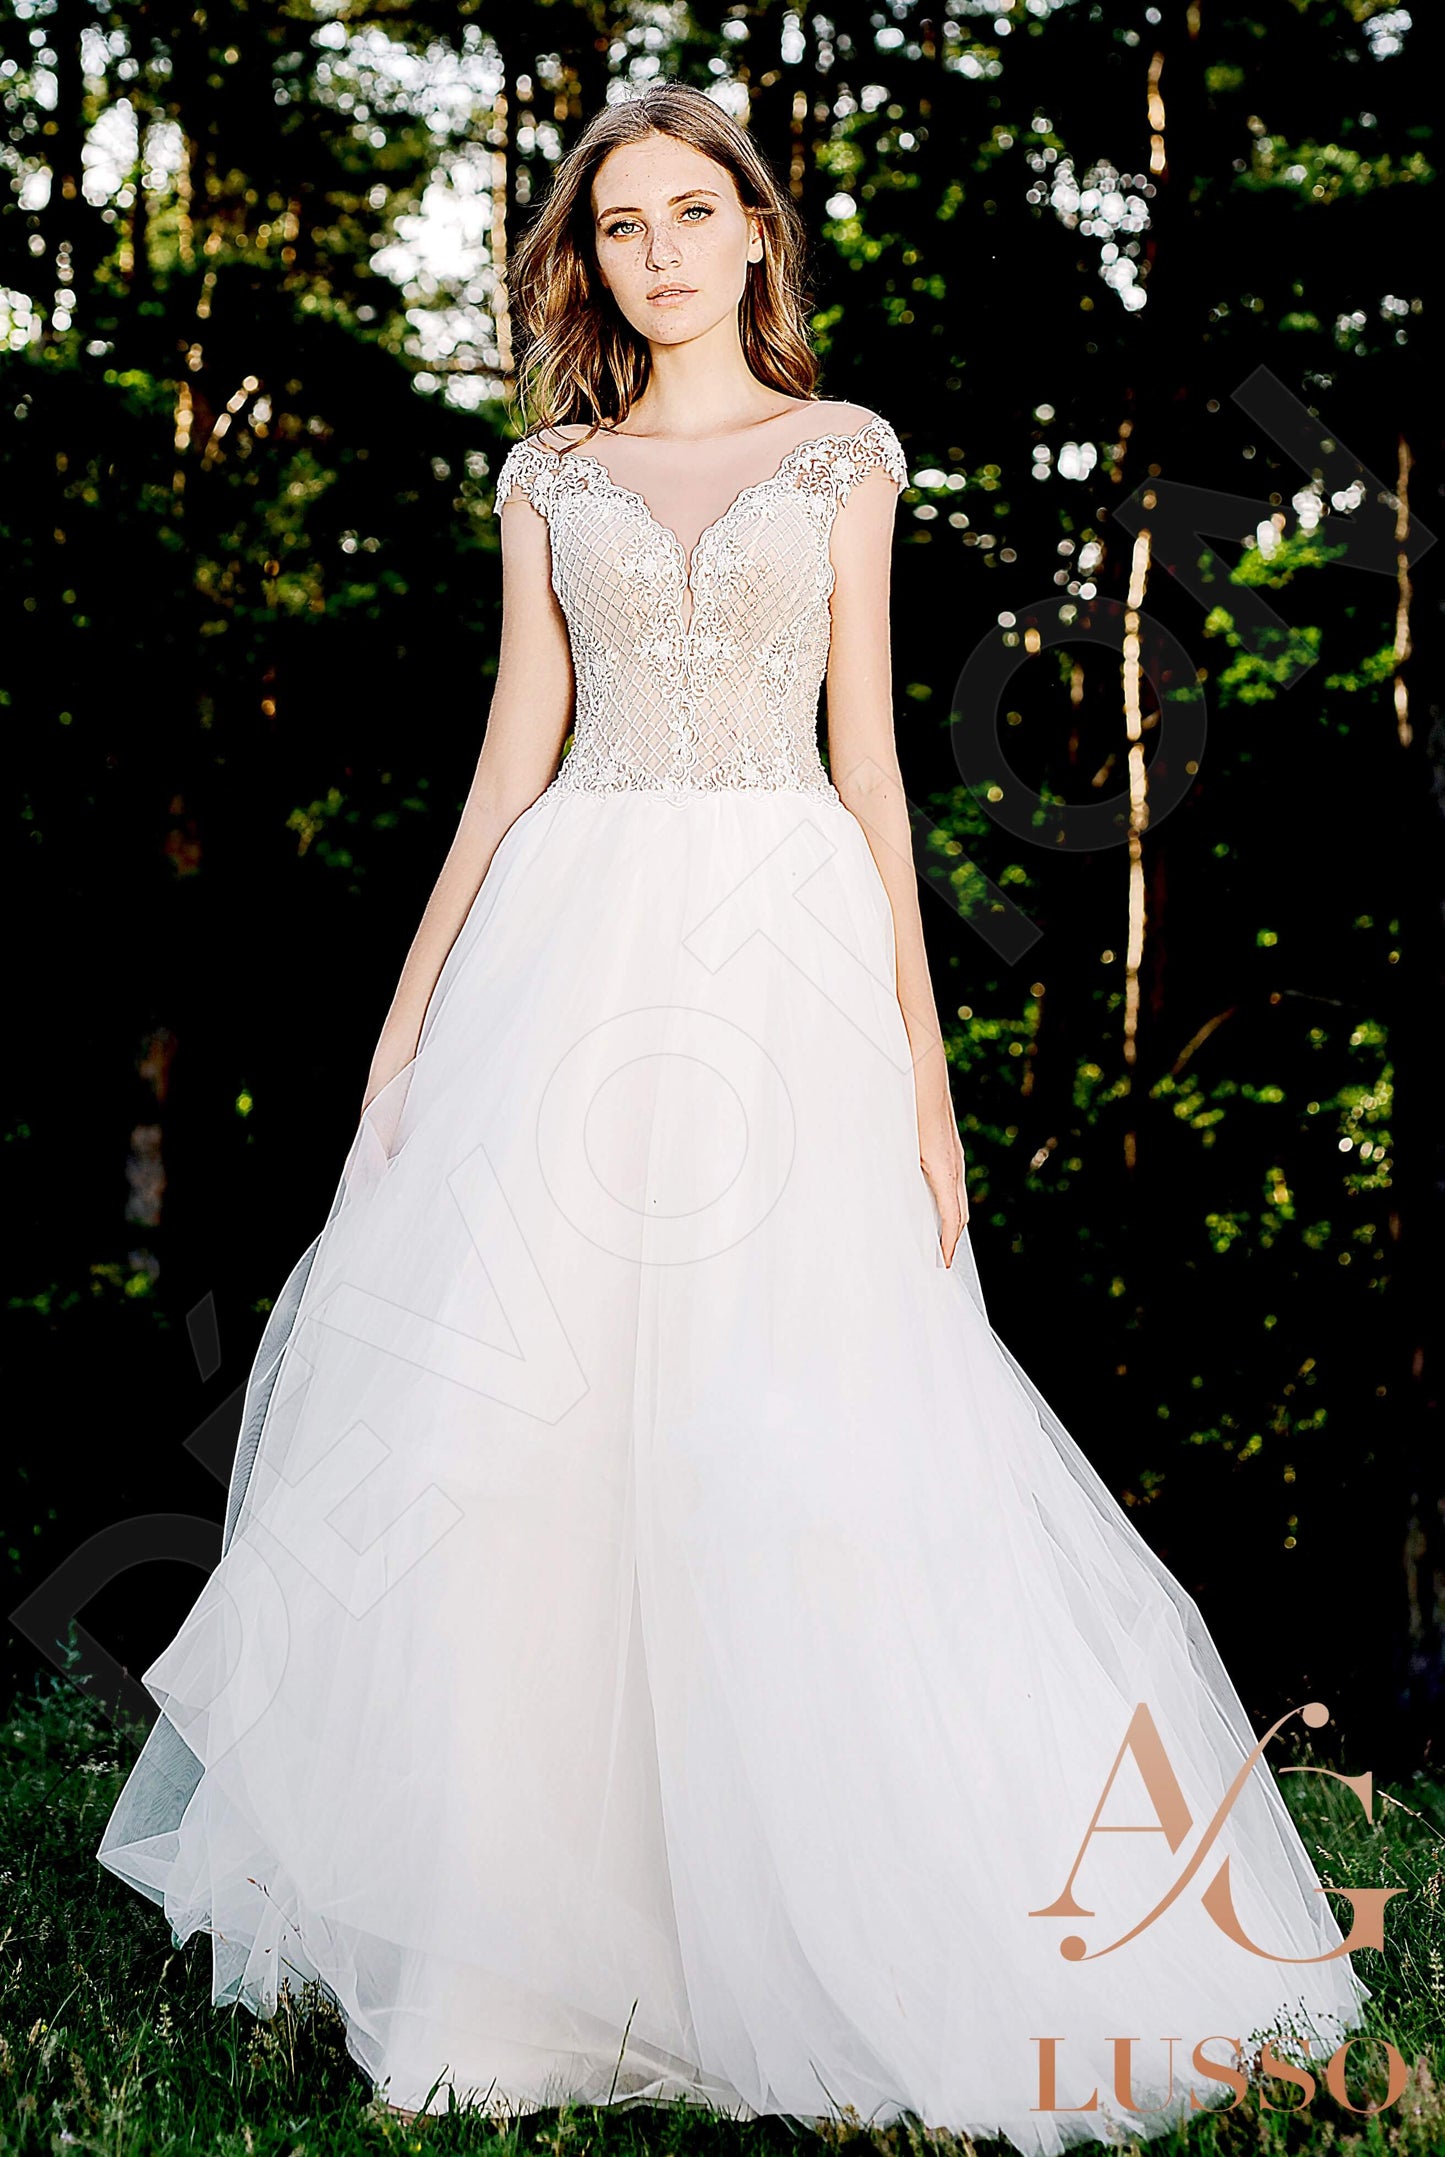 Quanesia Illusion back A-line Short/ Cap sleeve Wedding Dress 8